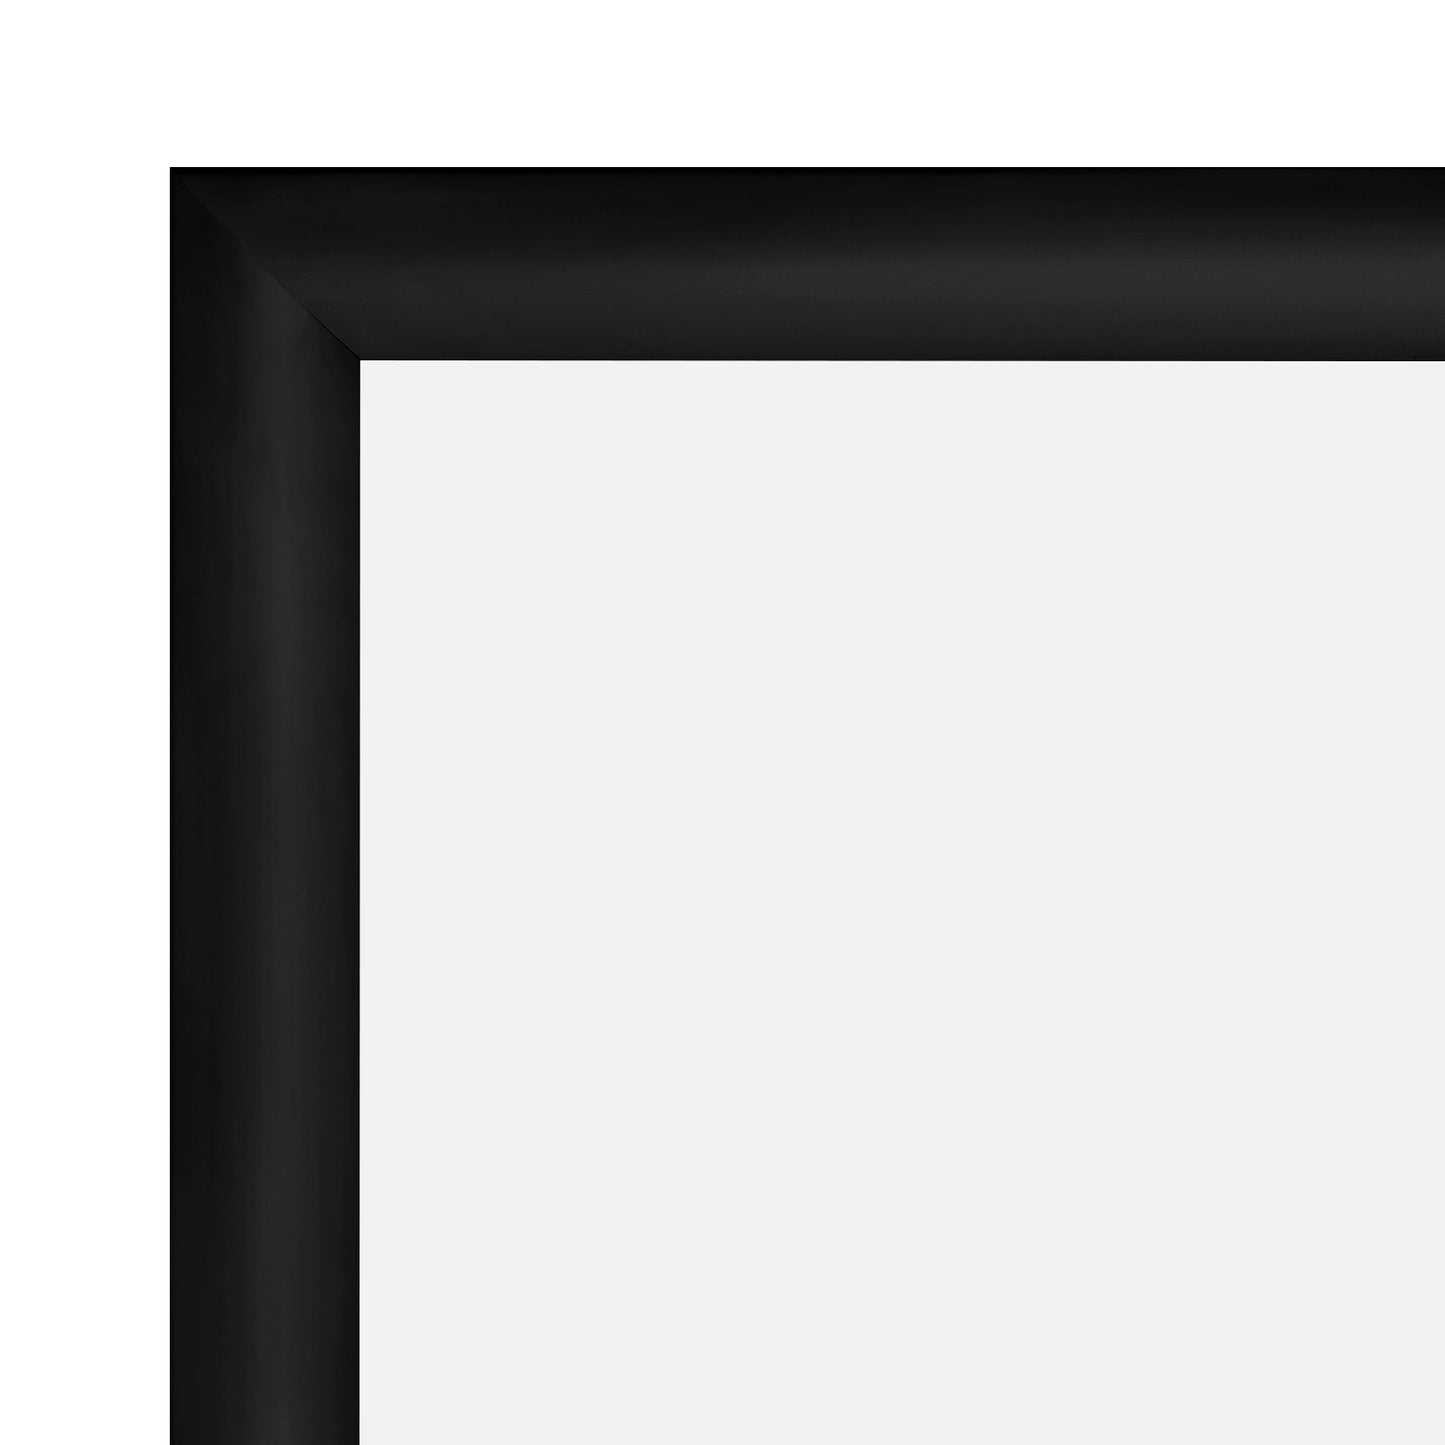 28x40 Black SnapeZo® Snap Frame - 1.2" Profile - Snap Frames Direct